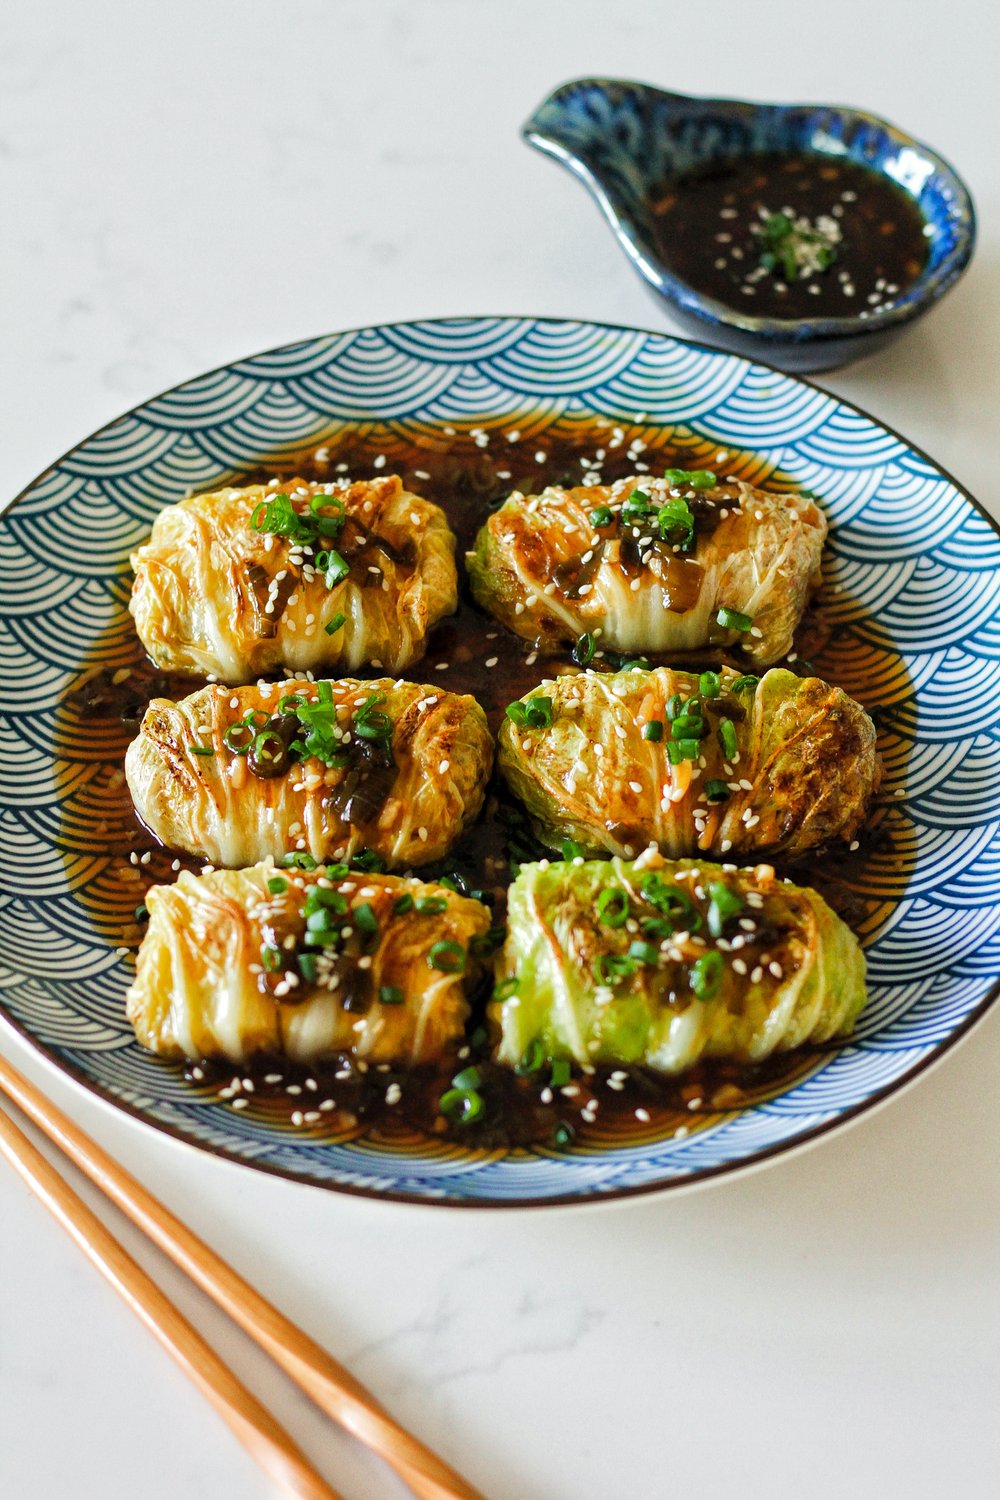 Vegan Napa Cabbage Rolls with Tofu Stuffing